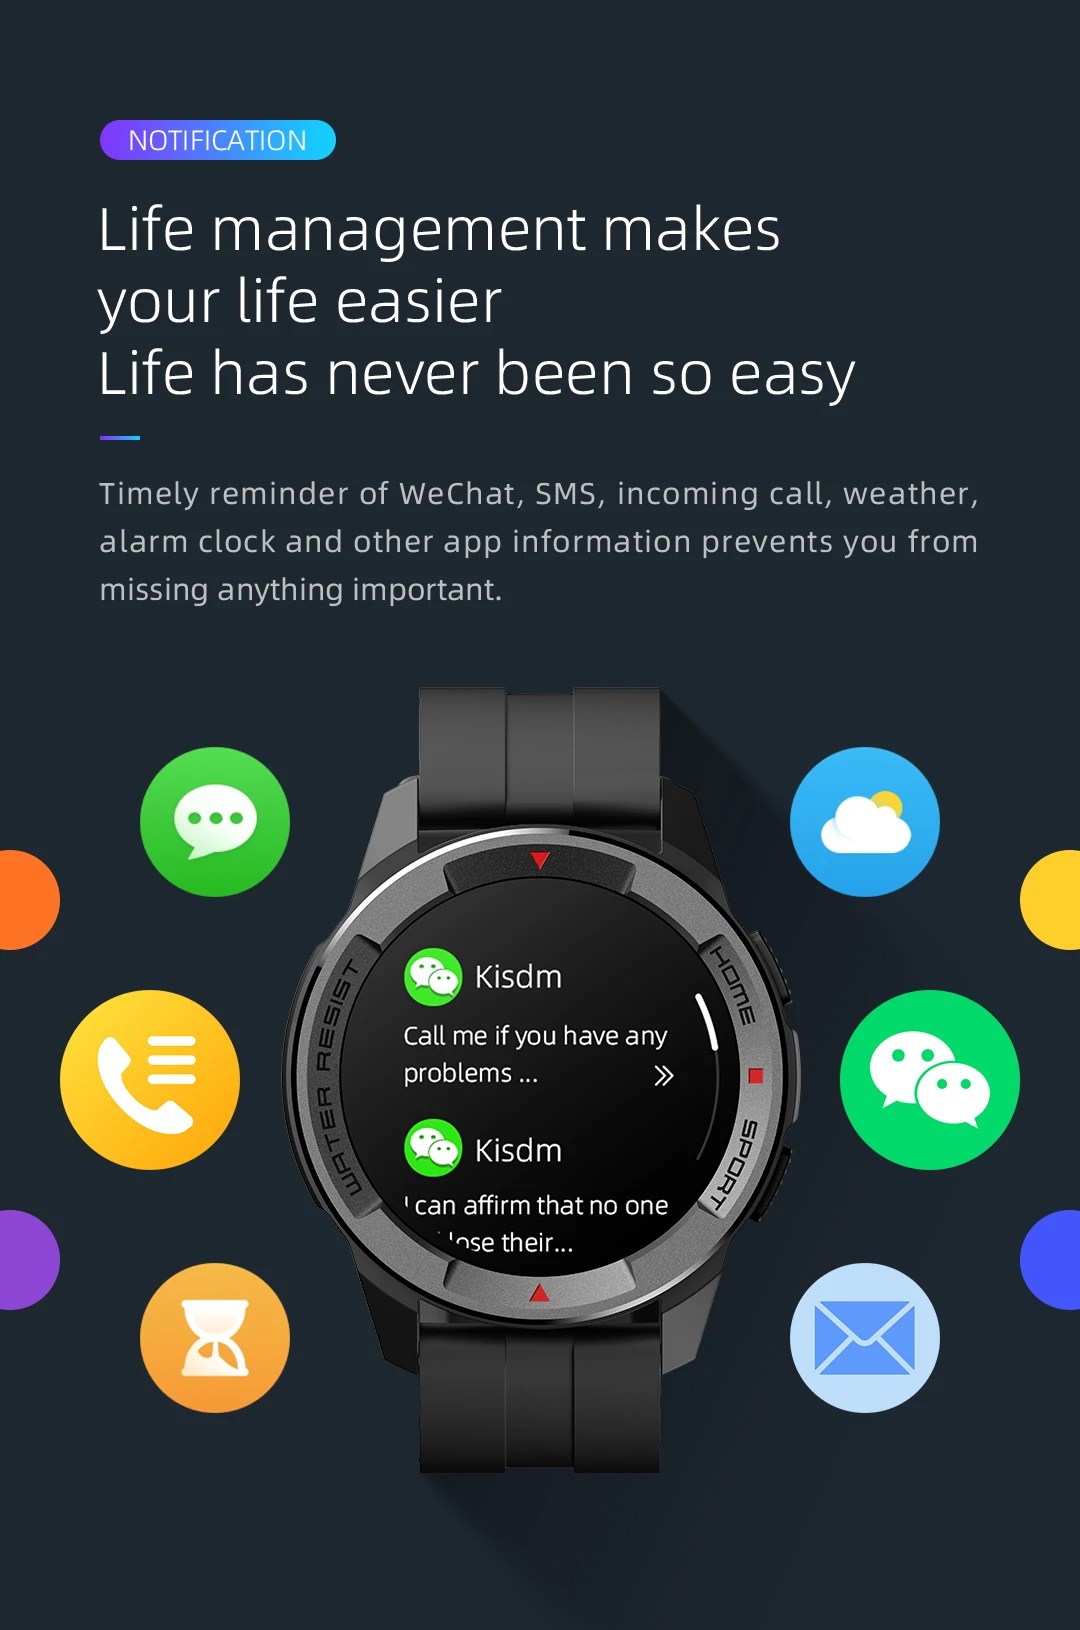 Original Mibro X1 Smart Watch 5ATM Waterproof Smartwatch Men Women Android IOS Fitness Sport Watch